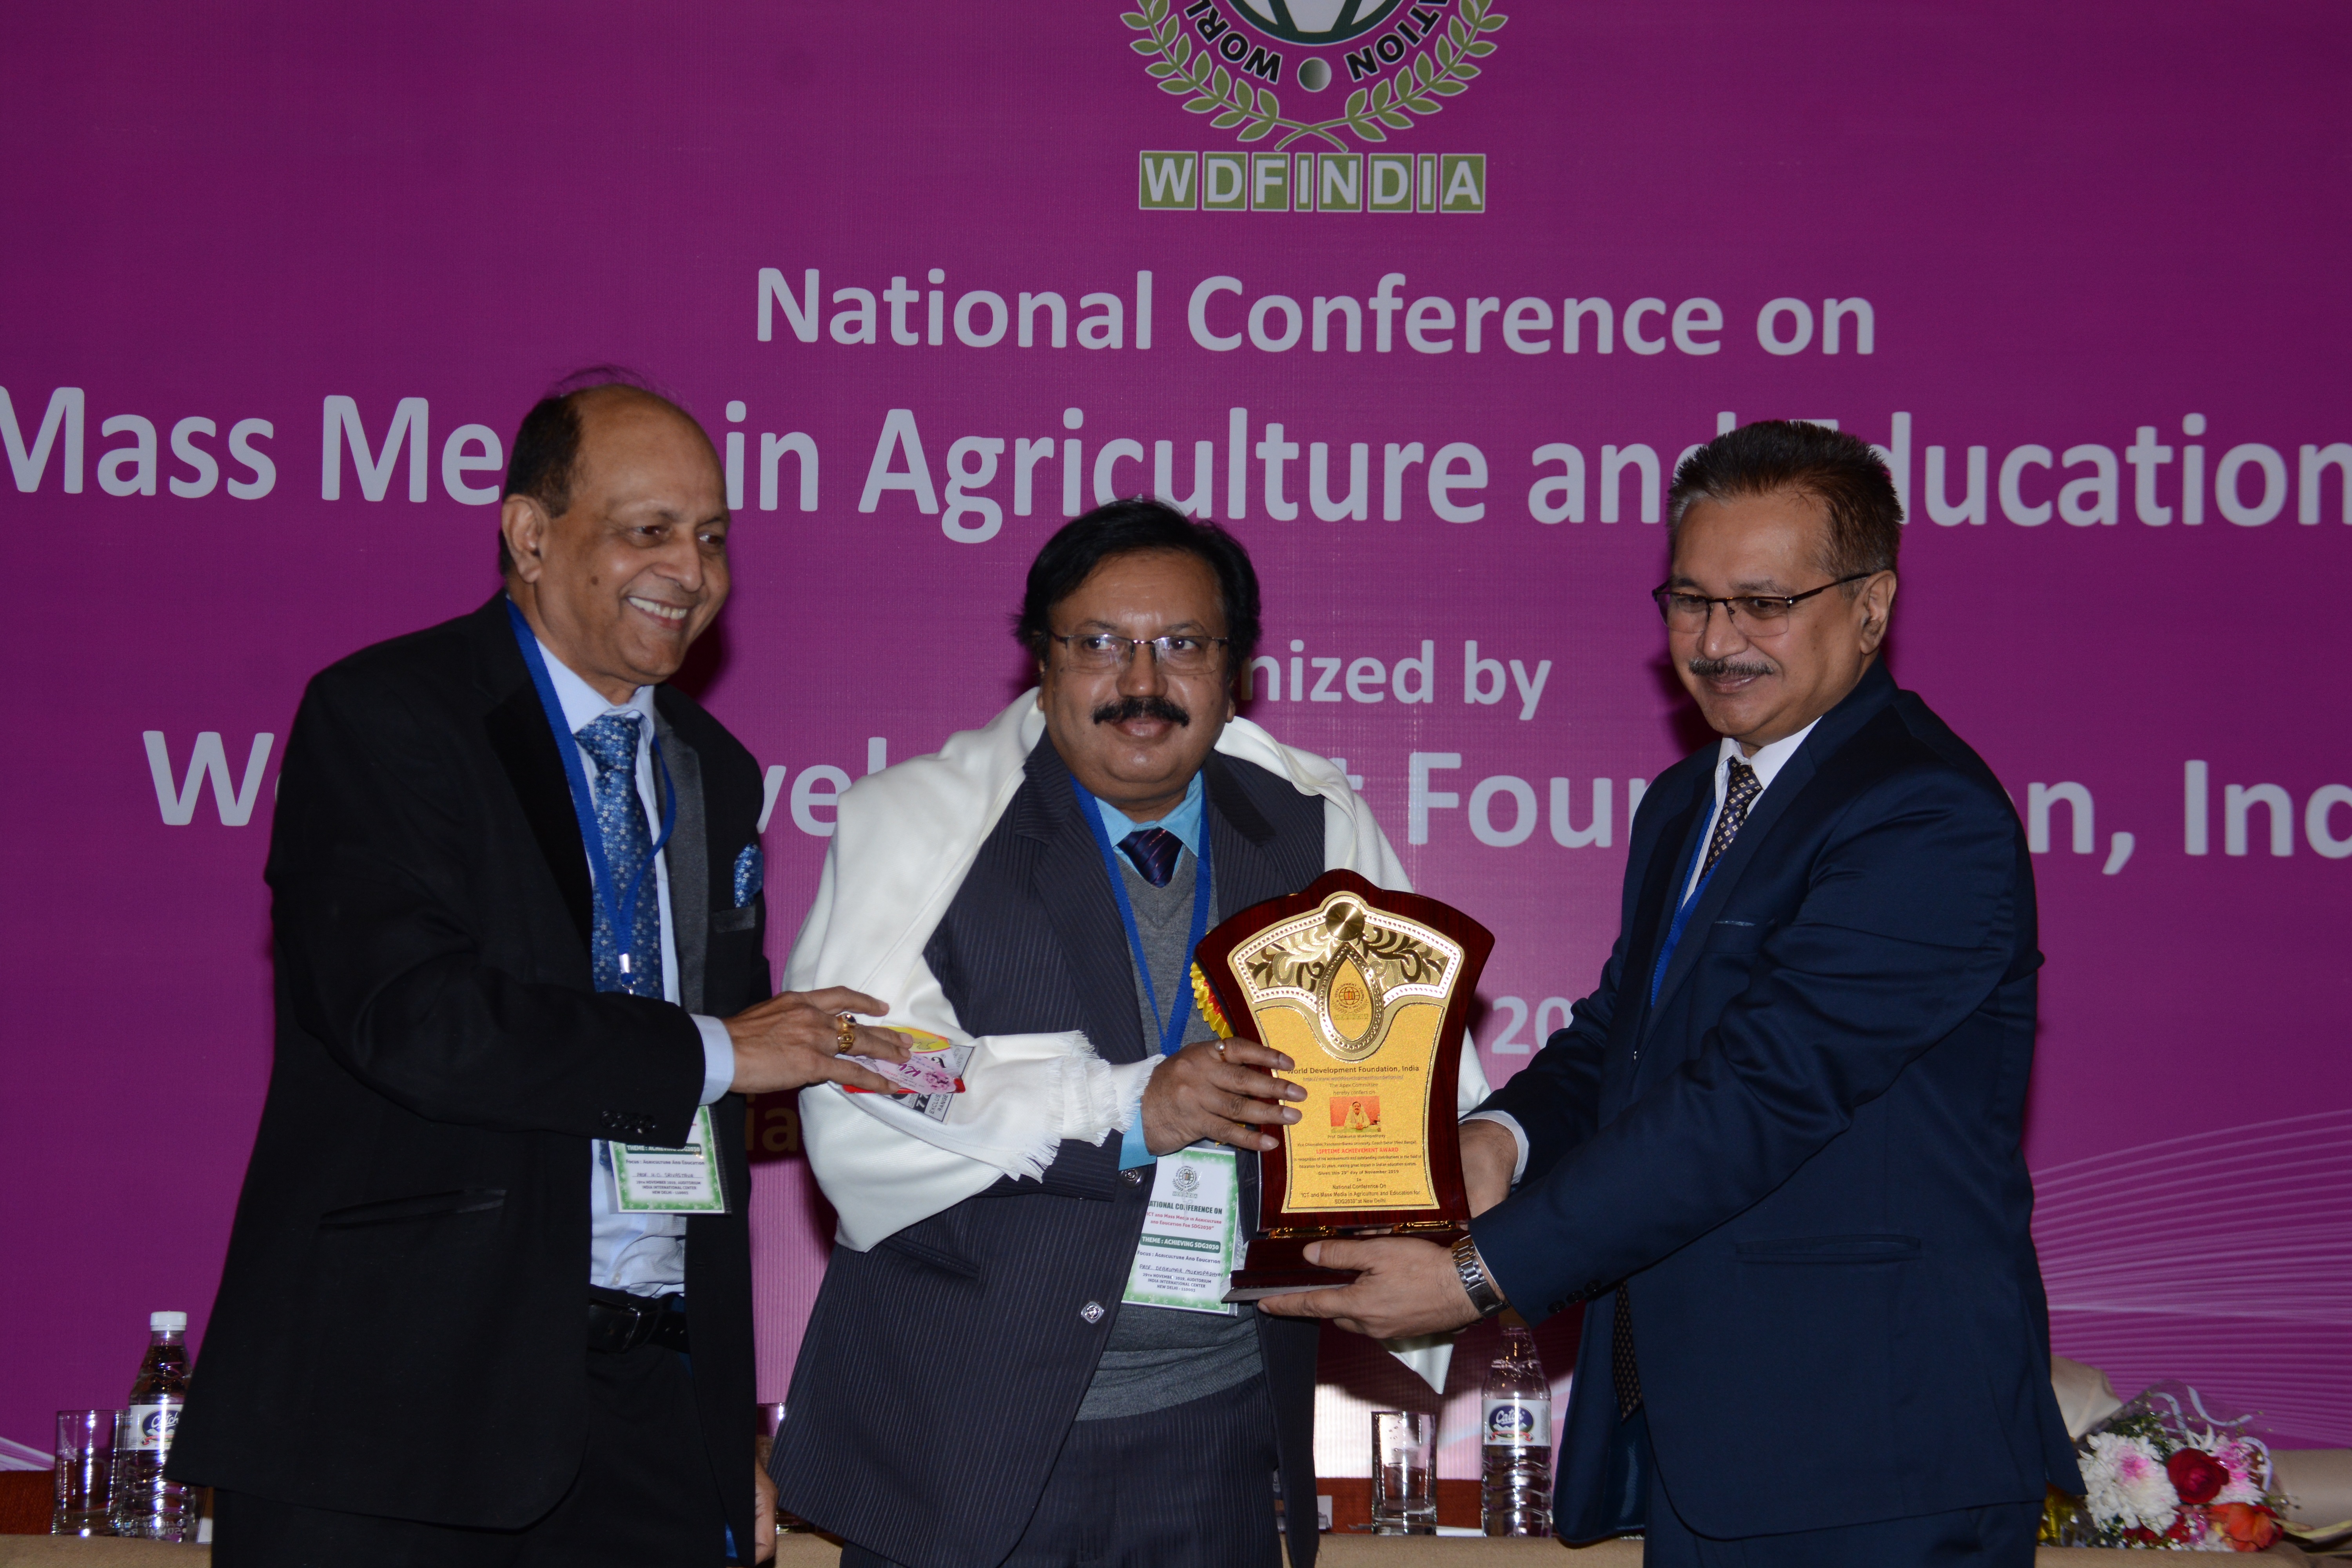 Dr. Debkumar Mukhopadhyay, receiving the Life Time Achievement award